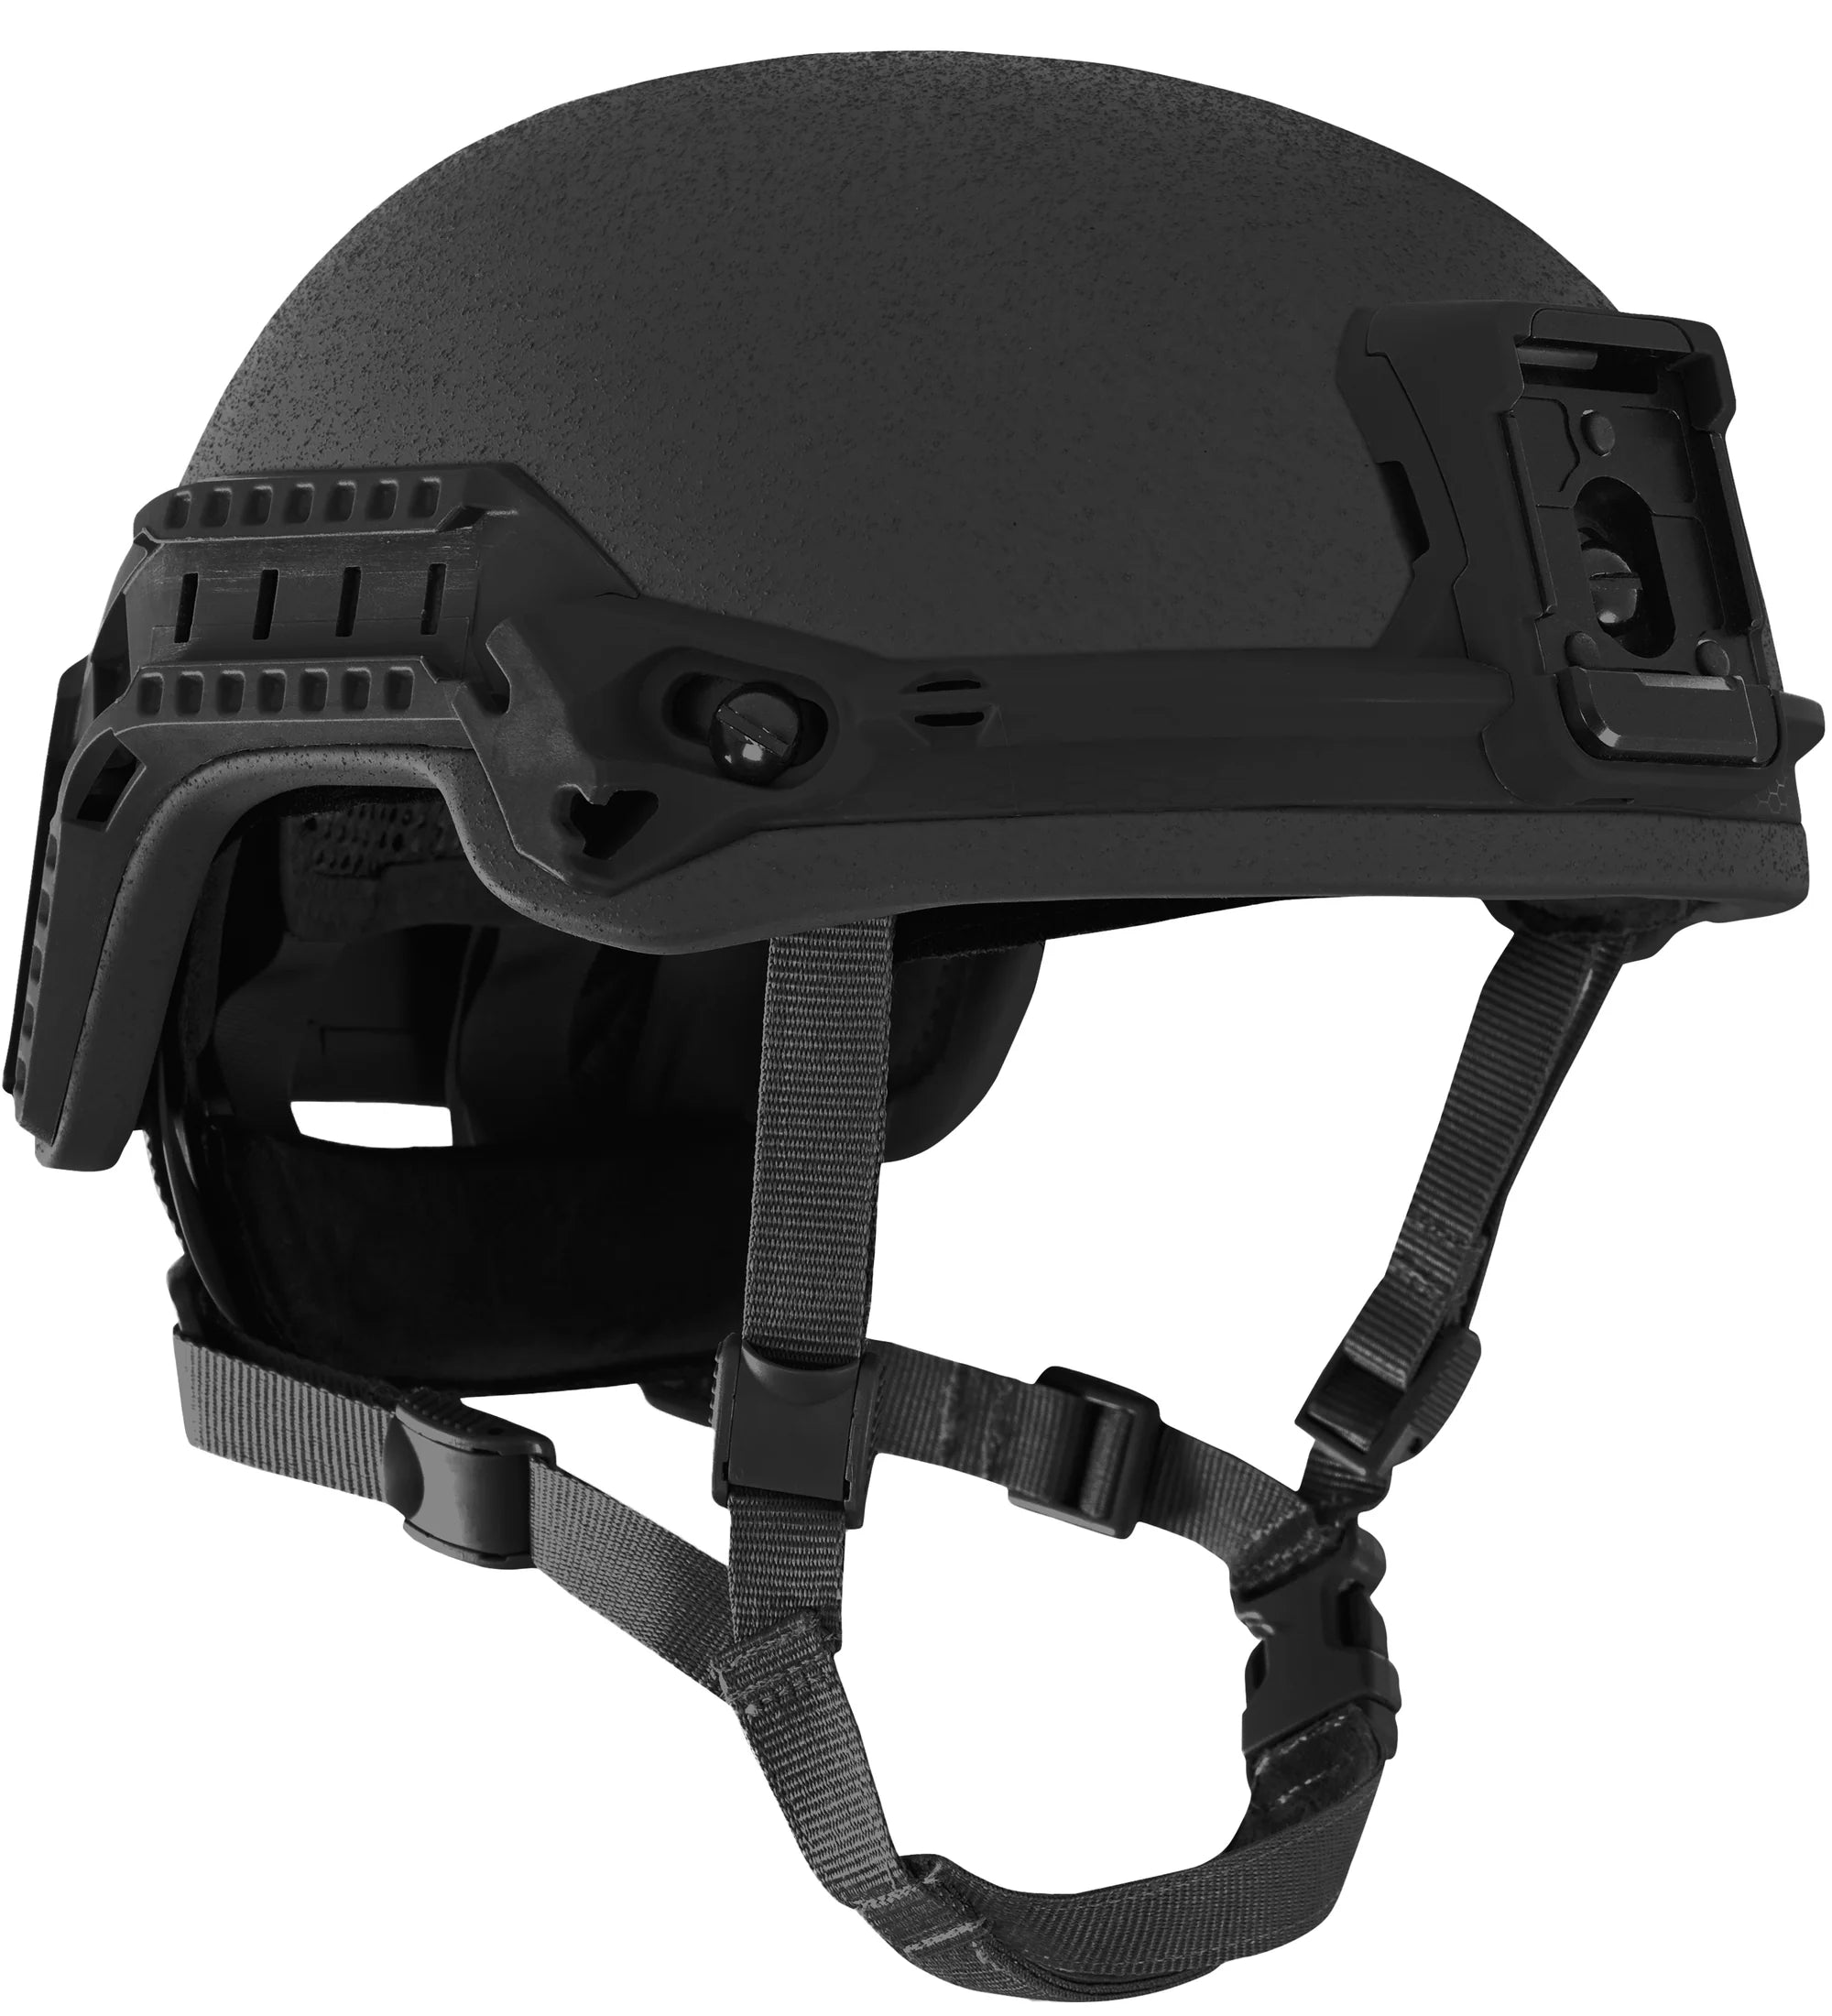 Galvion Batlskin Viper A3 Helmet - Tactical & Duty Gear